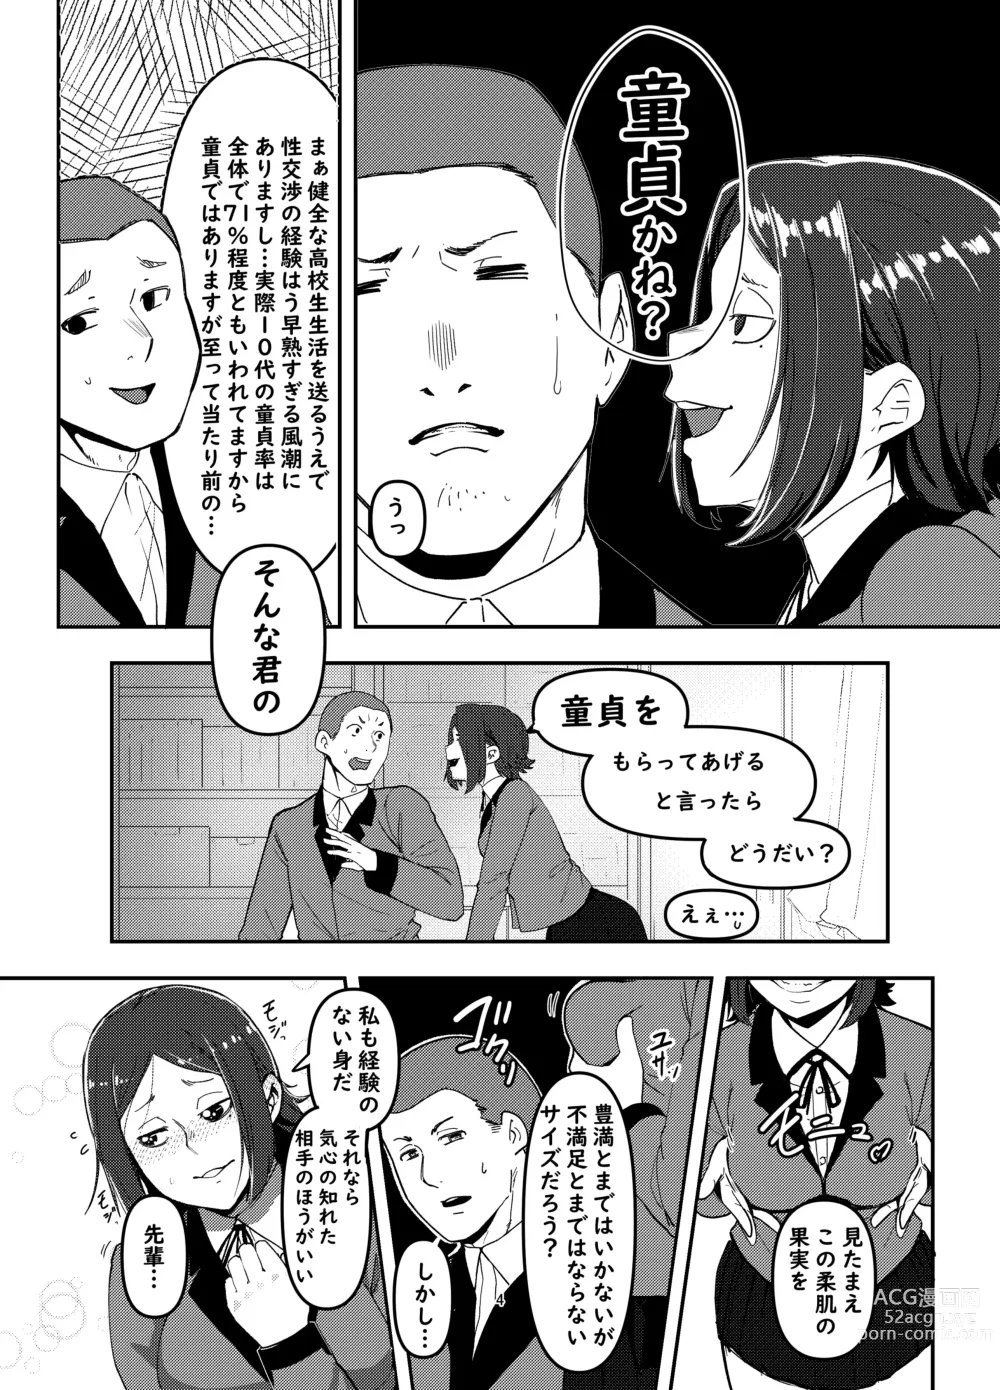 Page 4 of doujinshi Kamera o Tsukatte Odoseba Iijan ♪